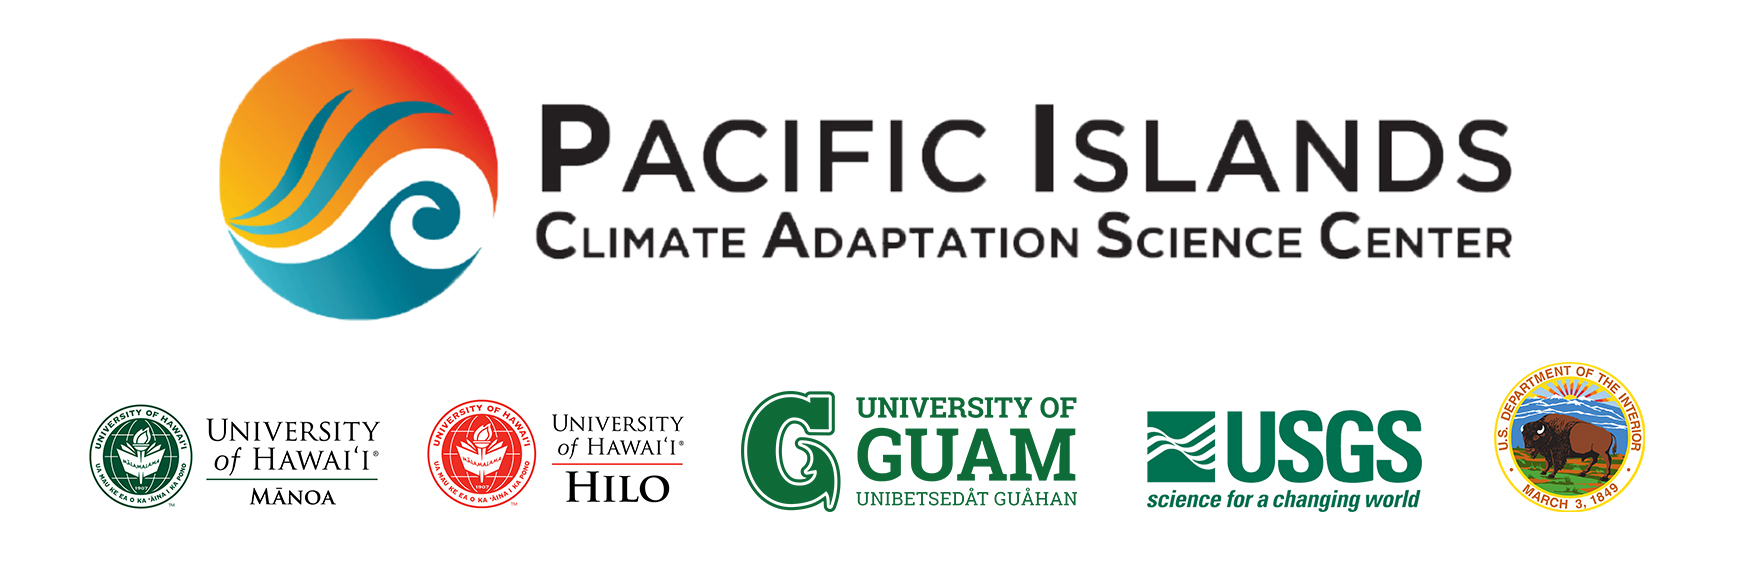 PI-CASC logo with affiliated universities, USGS and USDOI